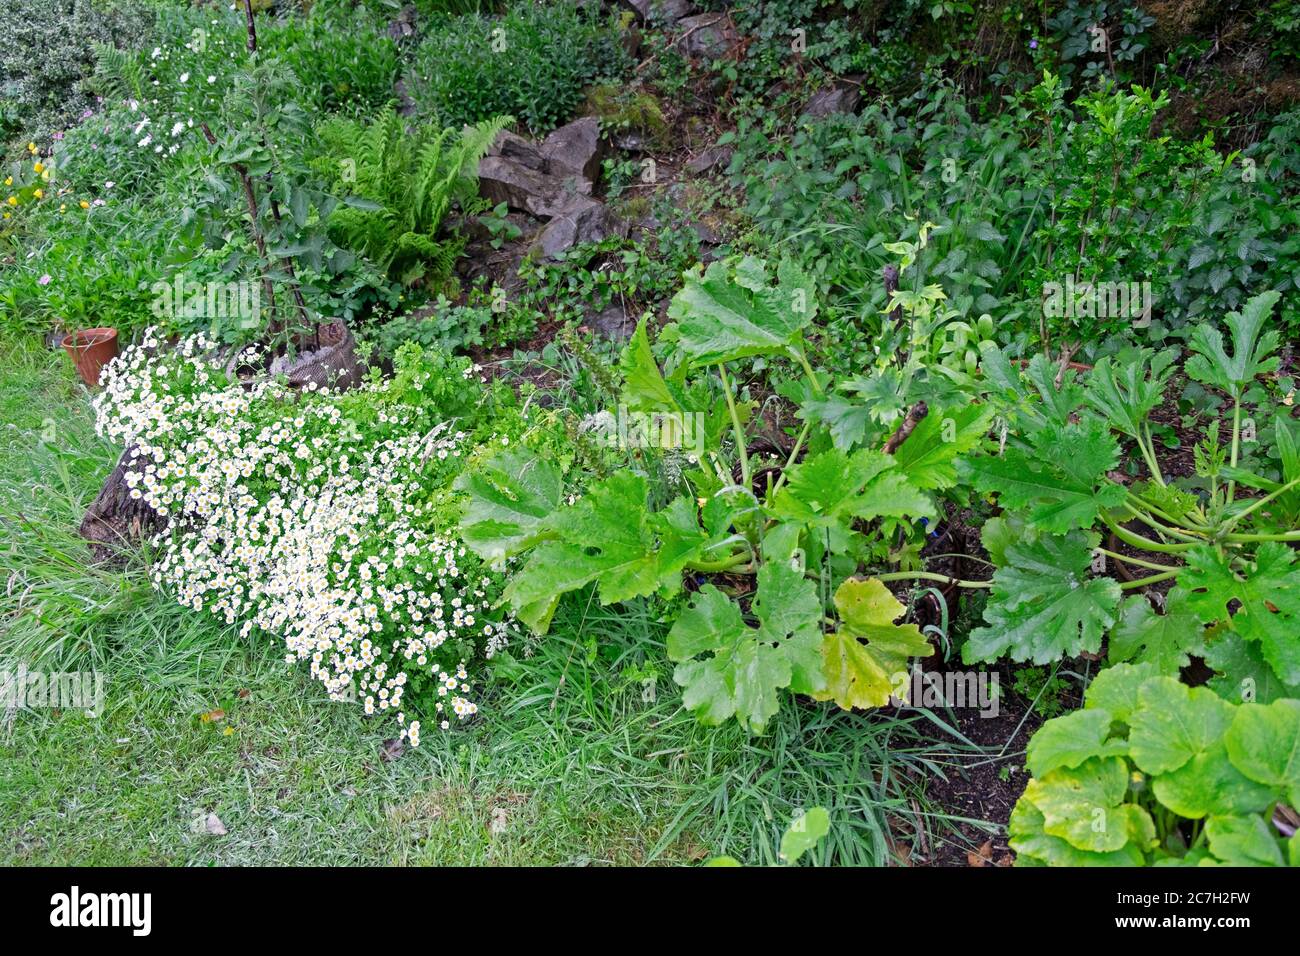 Courgette zuchini plants growing next to white feverfew herb in flower in a backyard garden in summer Carmarthenshire Wales UK  KATHY DEWITT Stock Photo